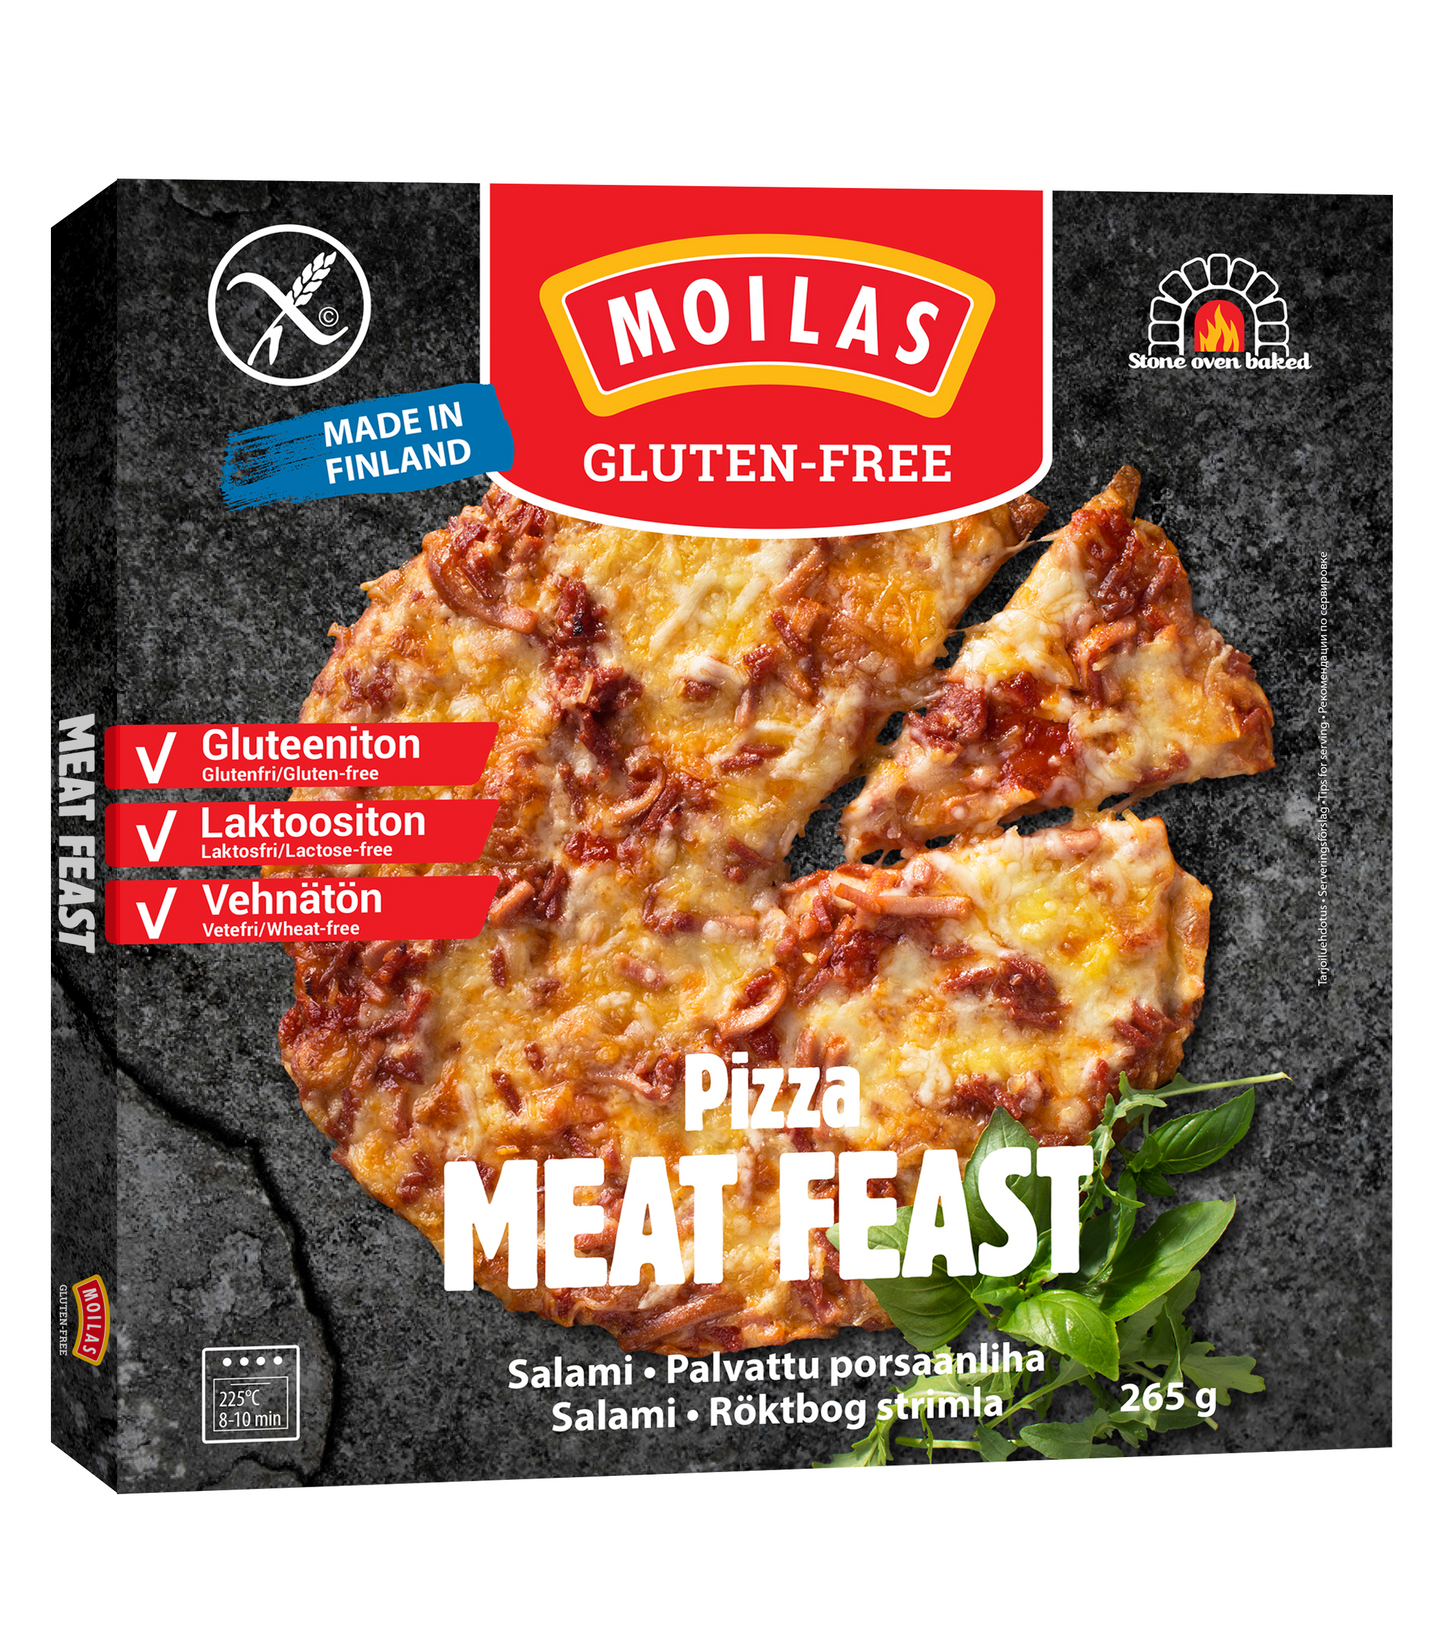 Moilas pizza meat feast 265g gluteeniton pakaste